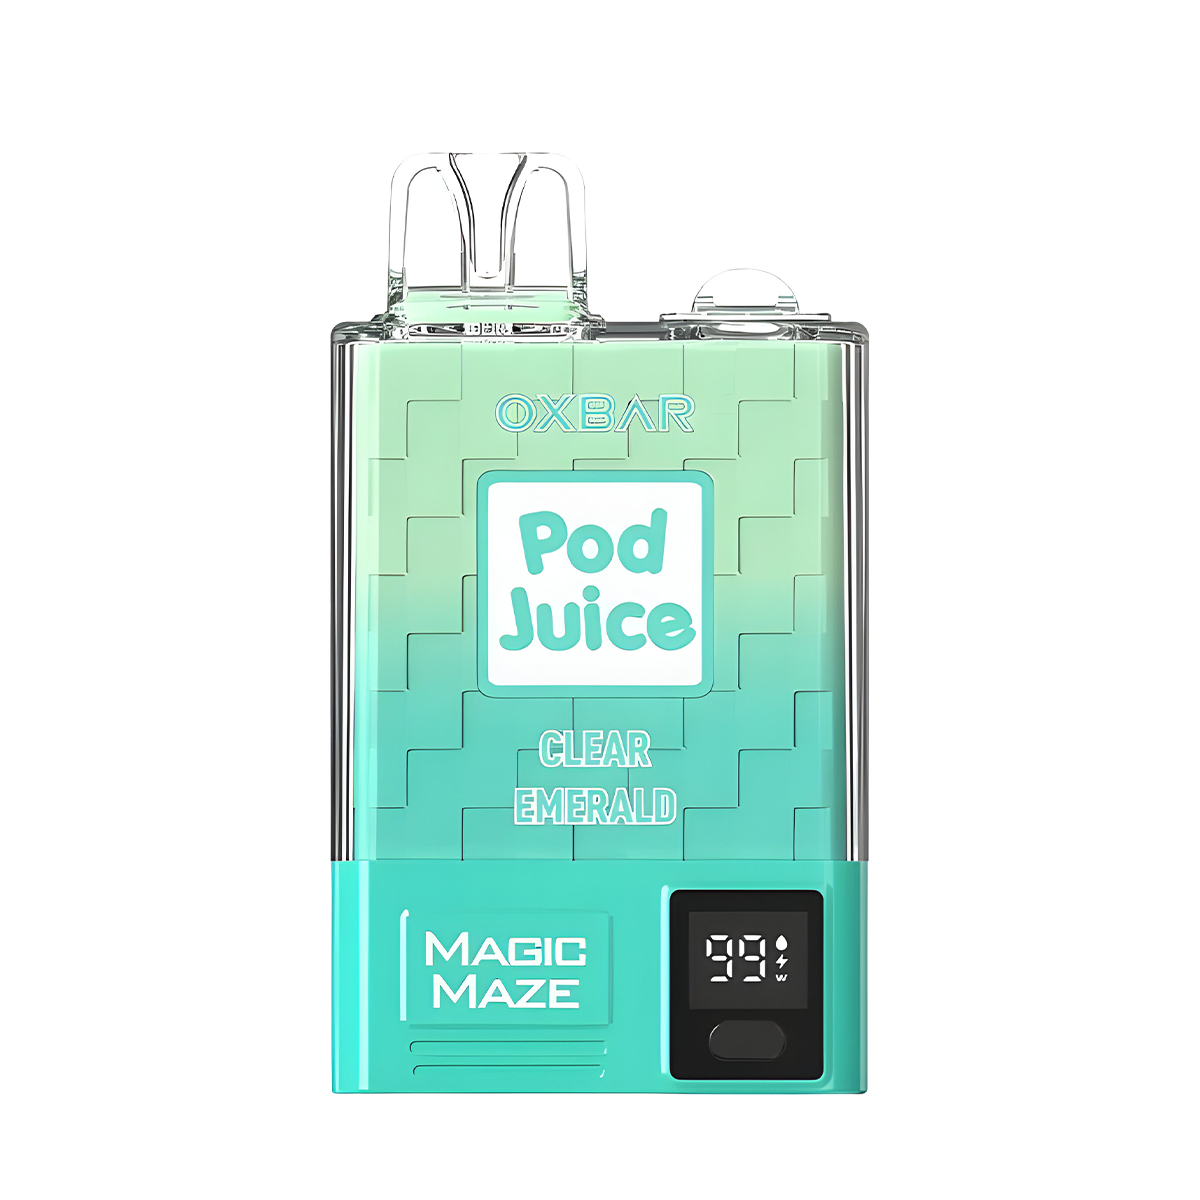 OXBAR x Pod Juice Magic Maze Pro Disposable Vape Clear Emerald  